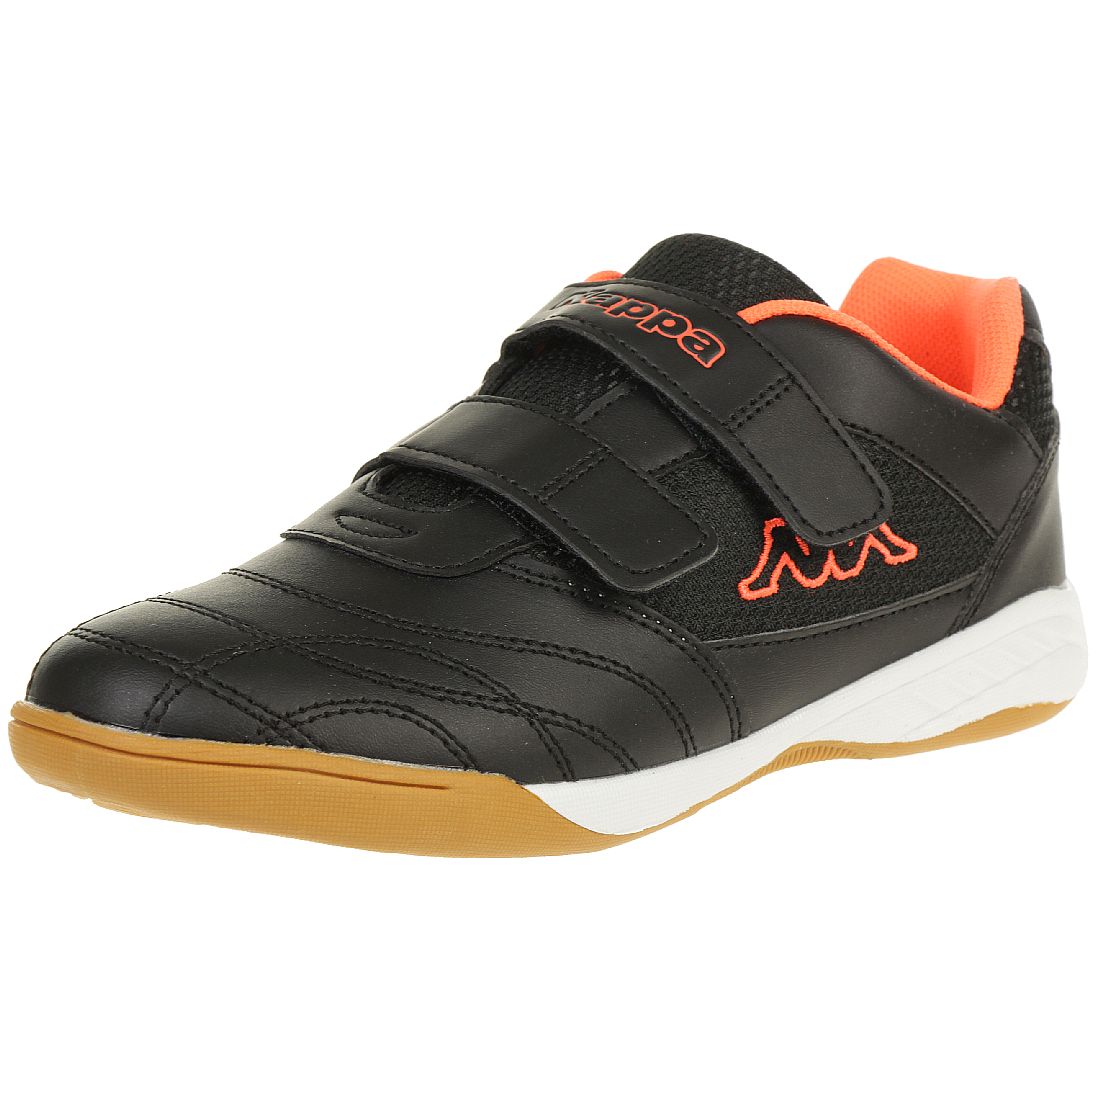 Kappa Unisex-Kinder Kickoff Sneaker, Schwarz (Black/Orange 1144), 30 EU